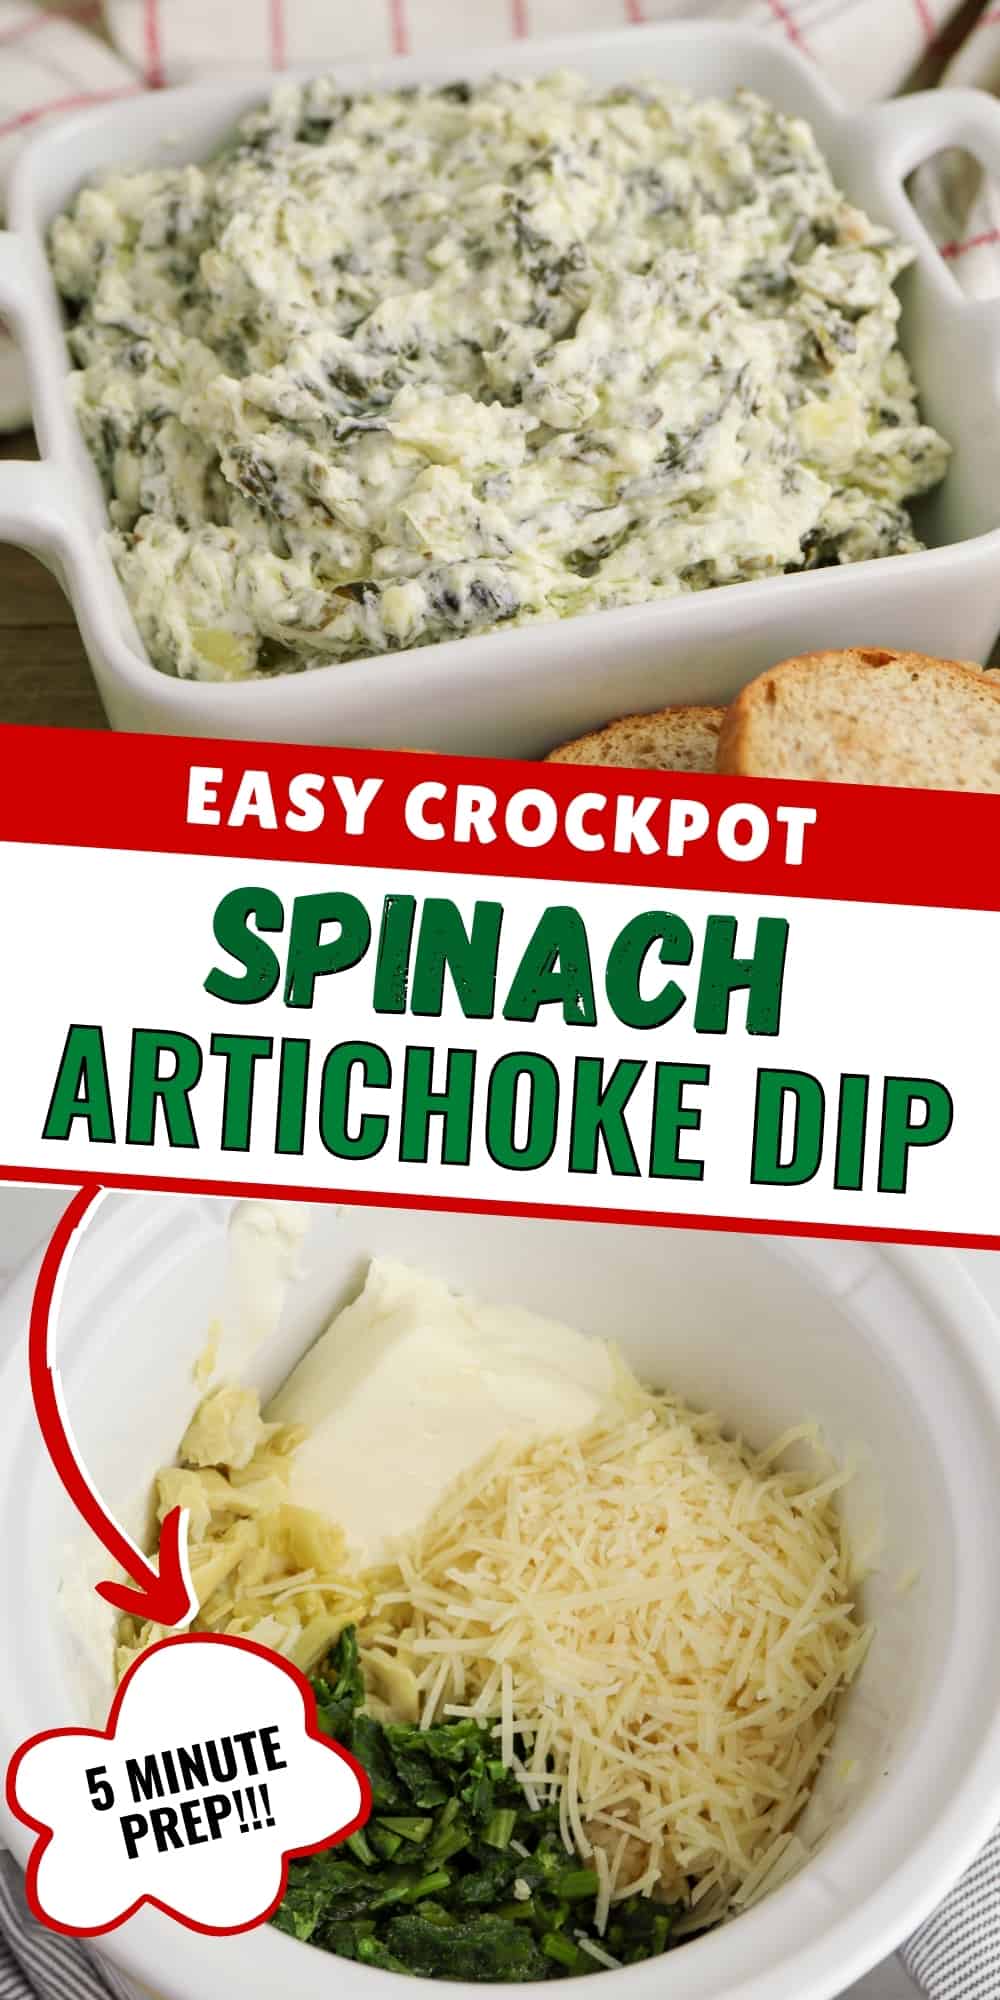 Easy crockpot spinach artichoke dip